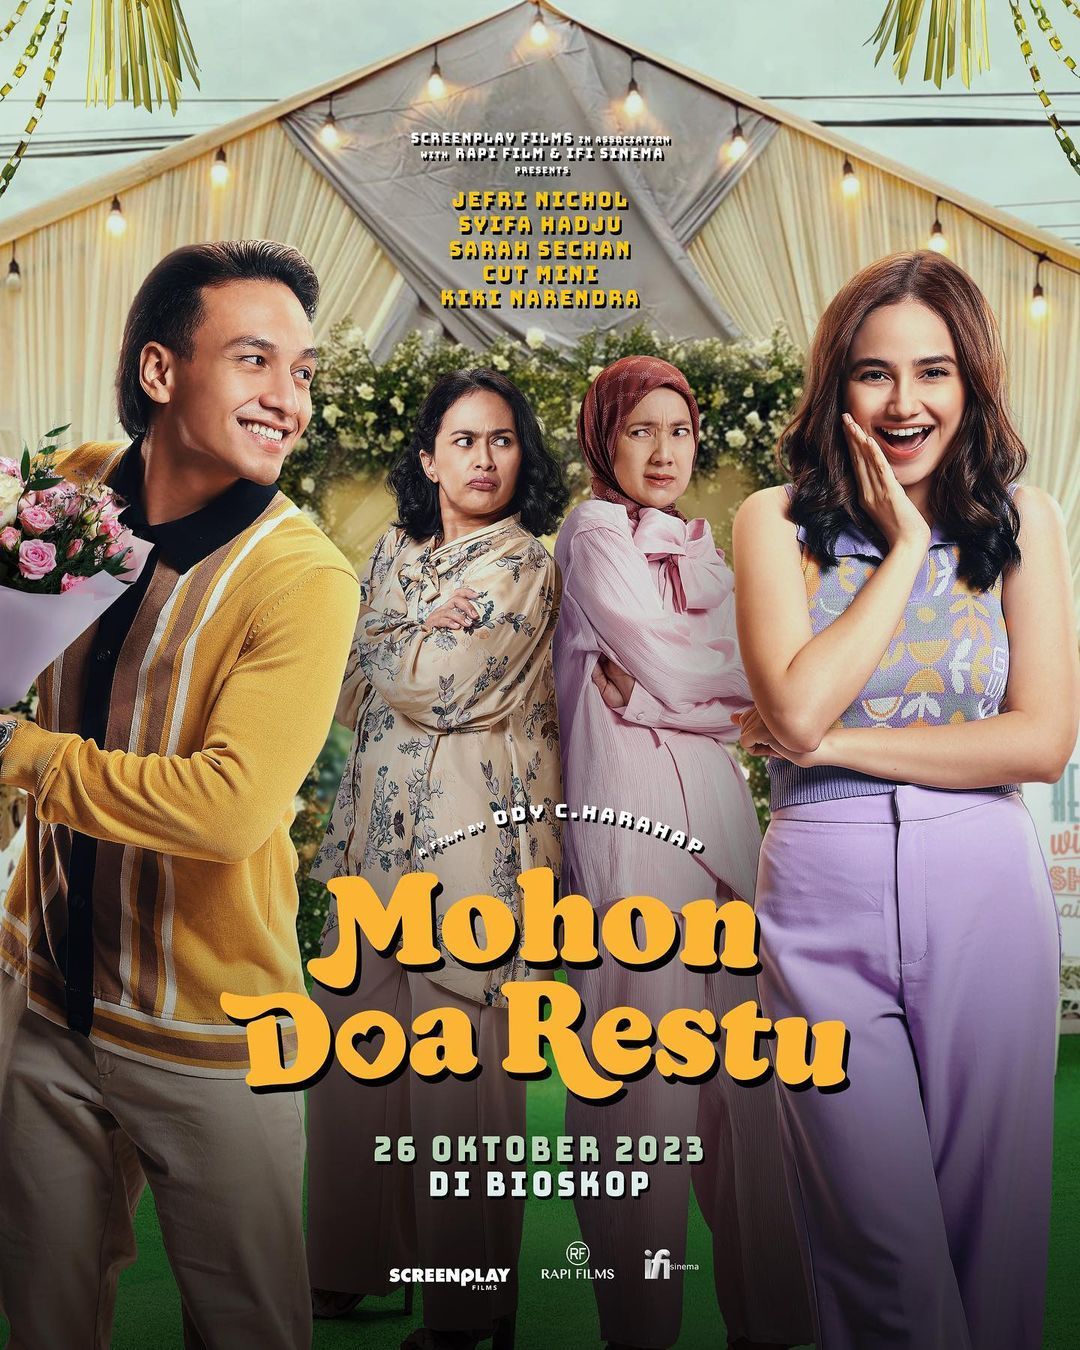 11 Film Komedi Romantis Indonesia Terbaru 2023 Seru Banget Indozone Movie Halaman 2 